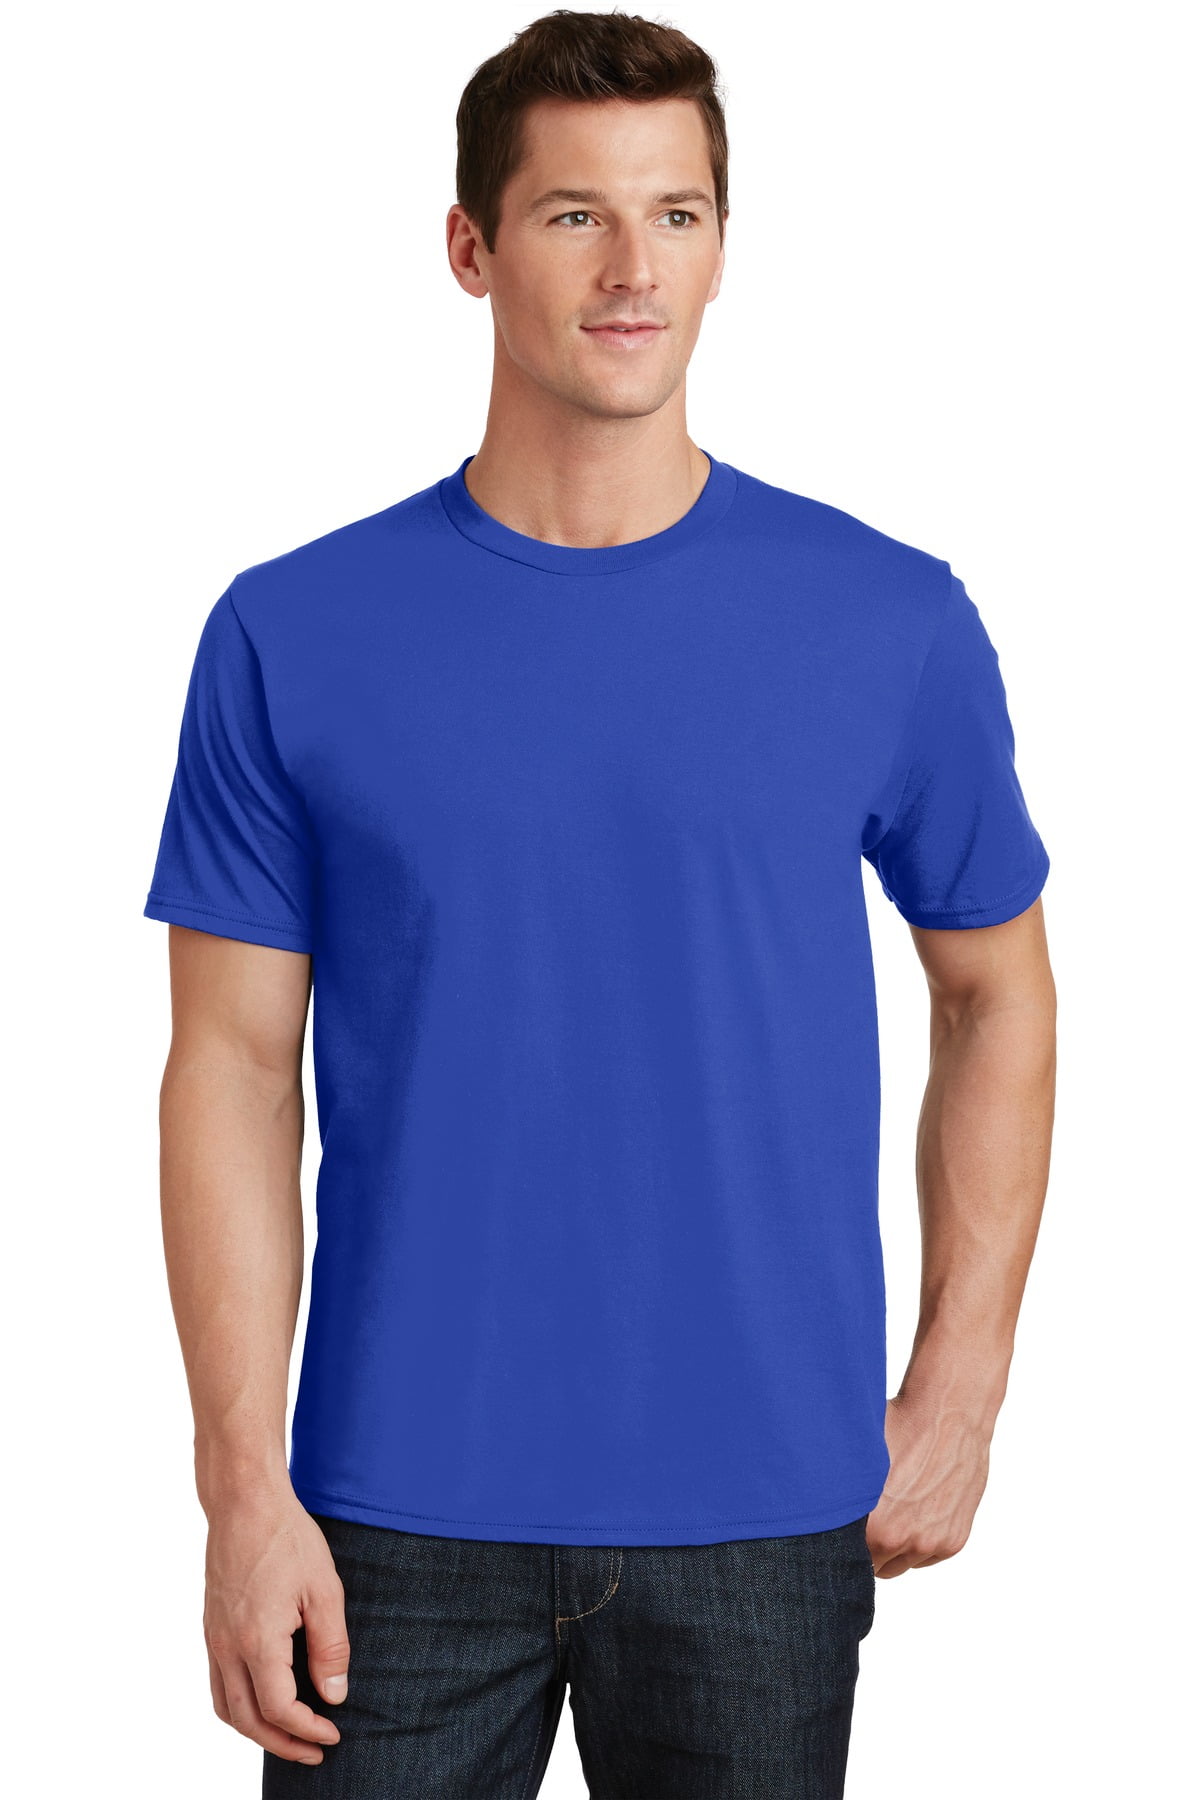 Port & Co Adult Male Men Plain Short Sleeves T-Shirt Athletic Royal 3X ...